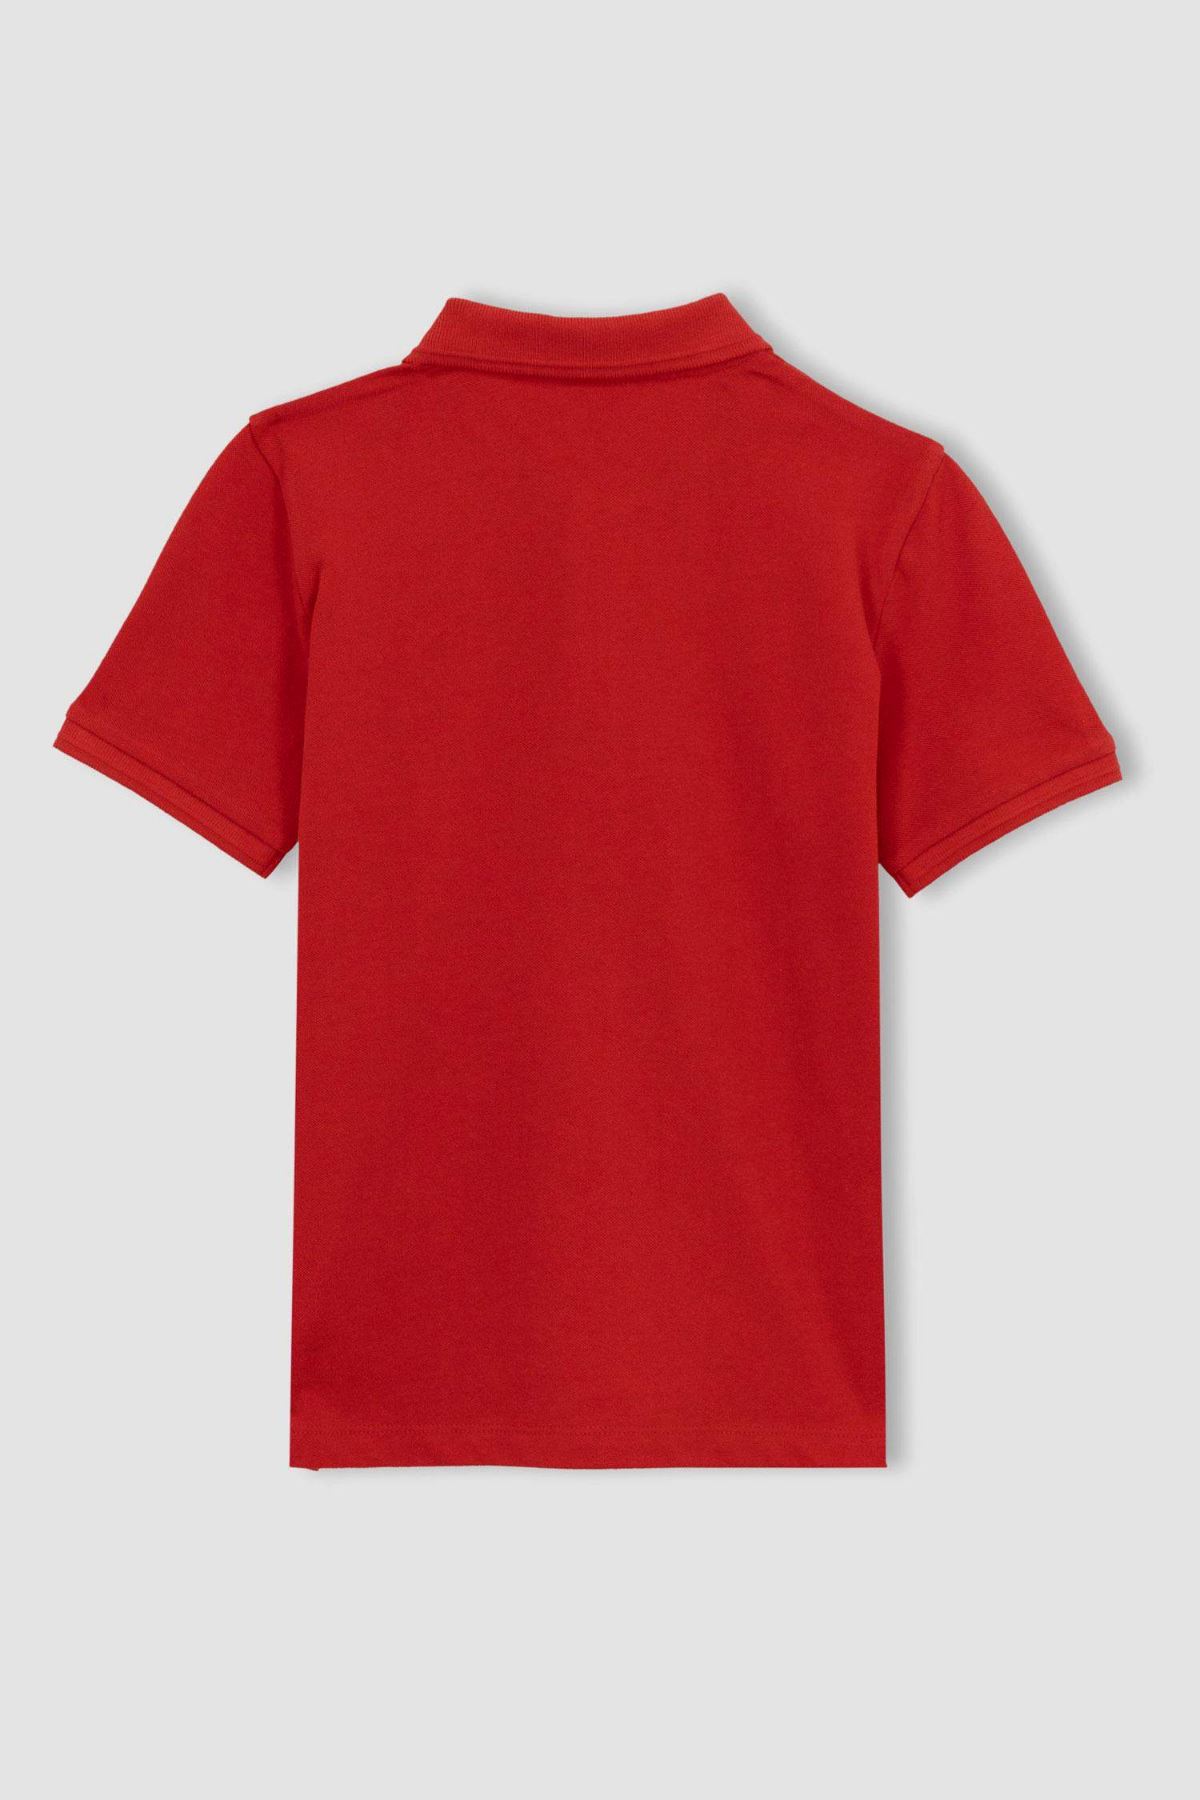 Defacto Erkek Çocuk Kırmızı Tişört - K1689A6/RD282